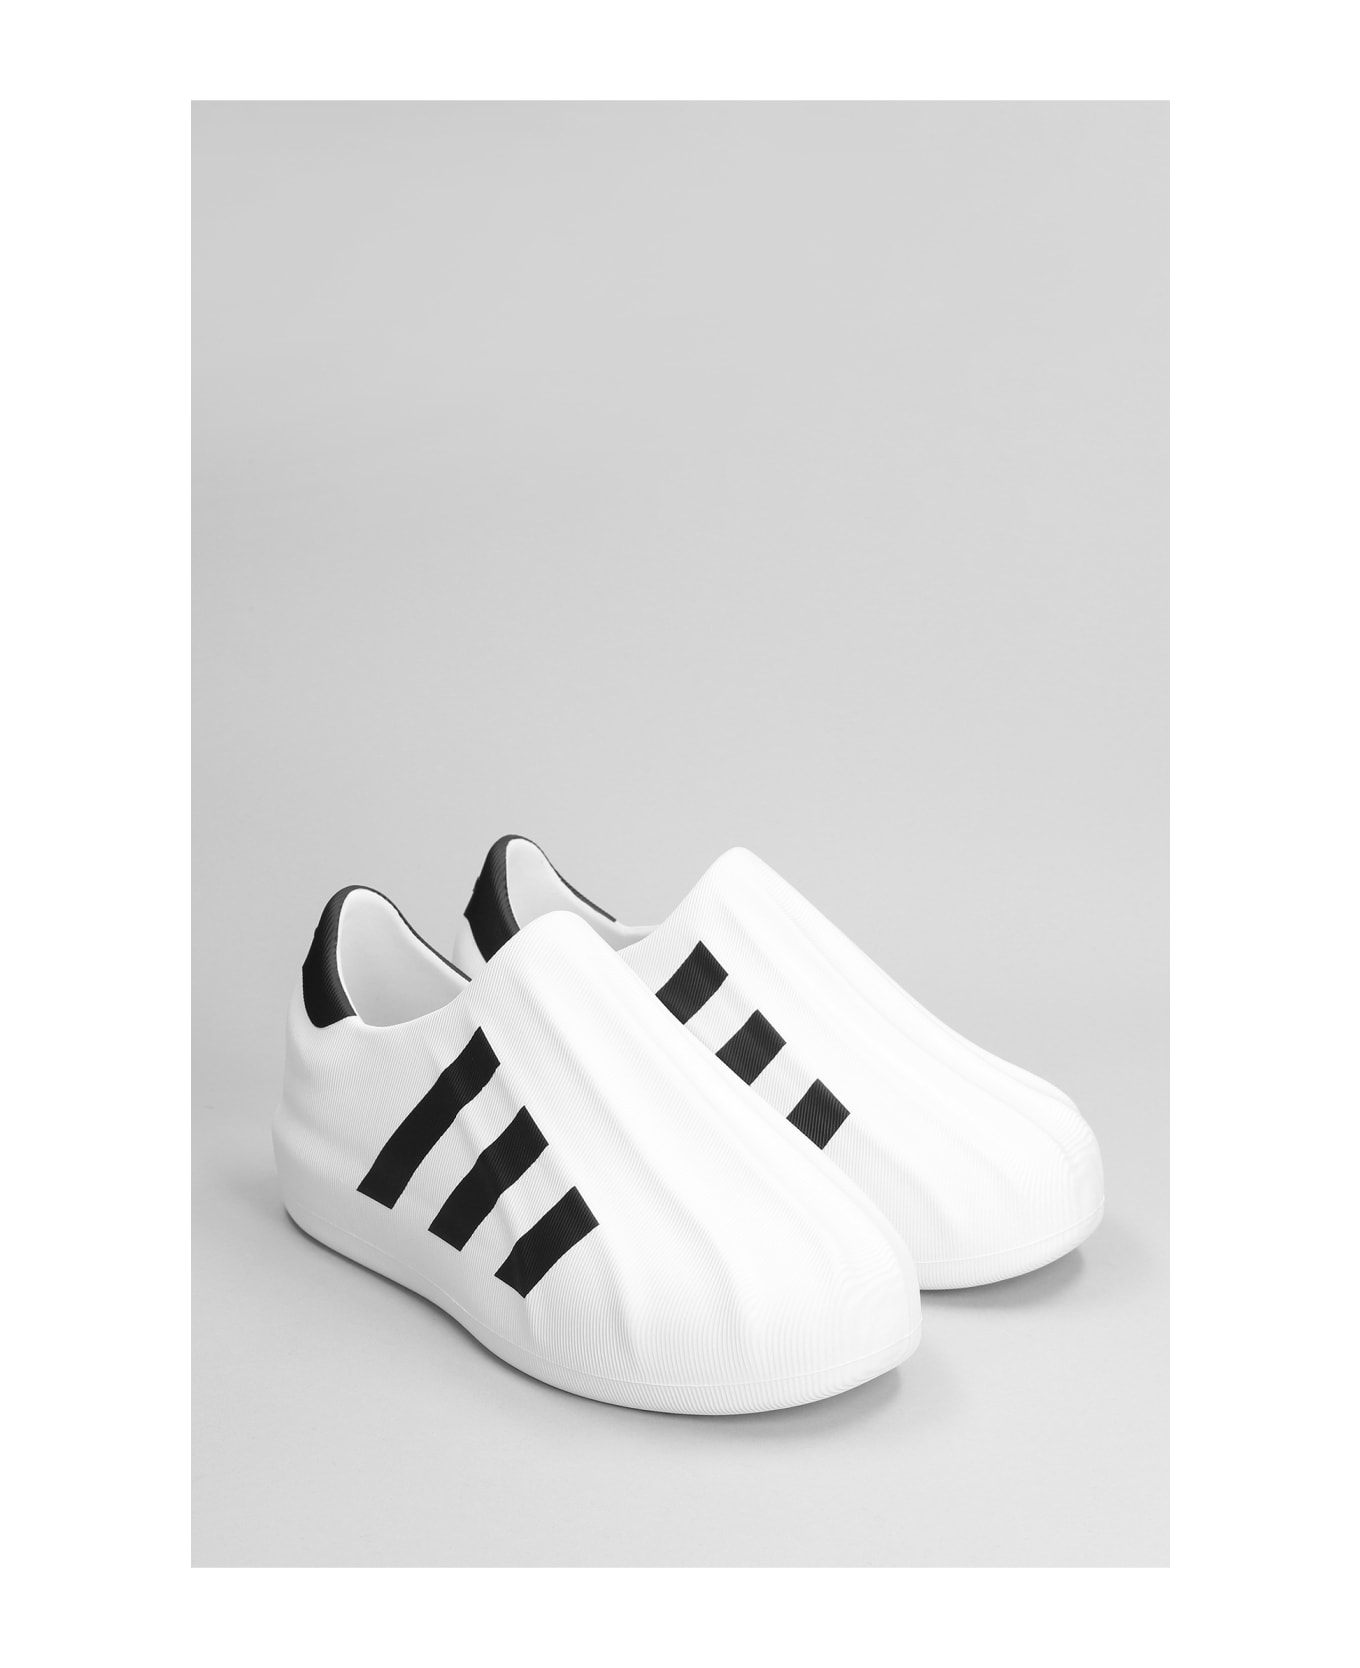 Adidas Originals Adifom Superstar Sneakers - Cwhite Cblack Cblack